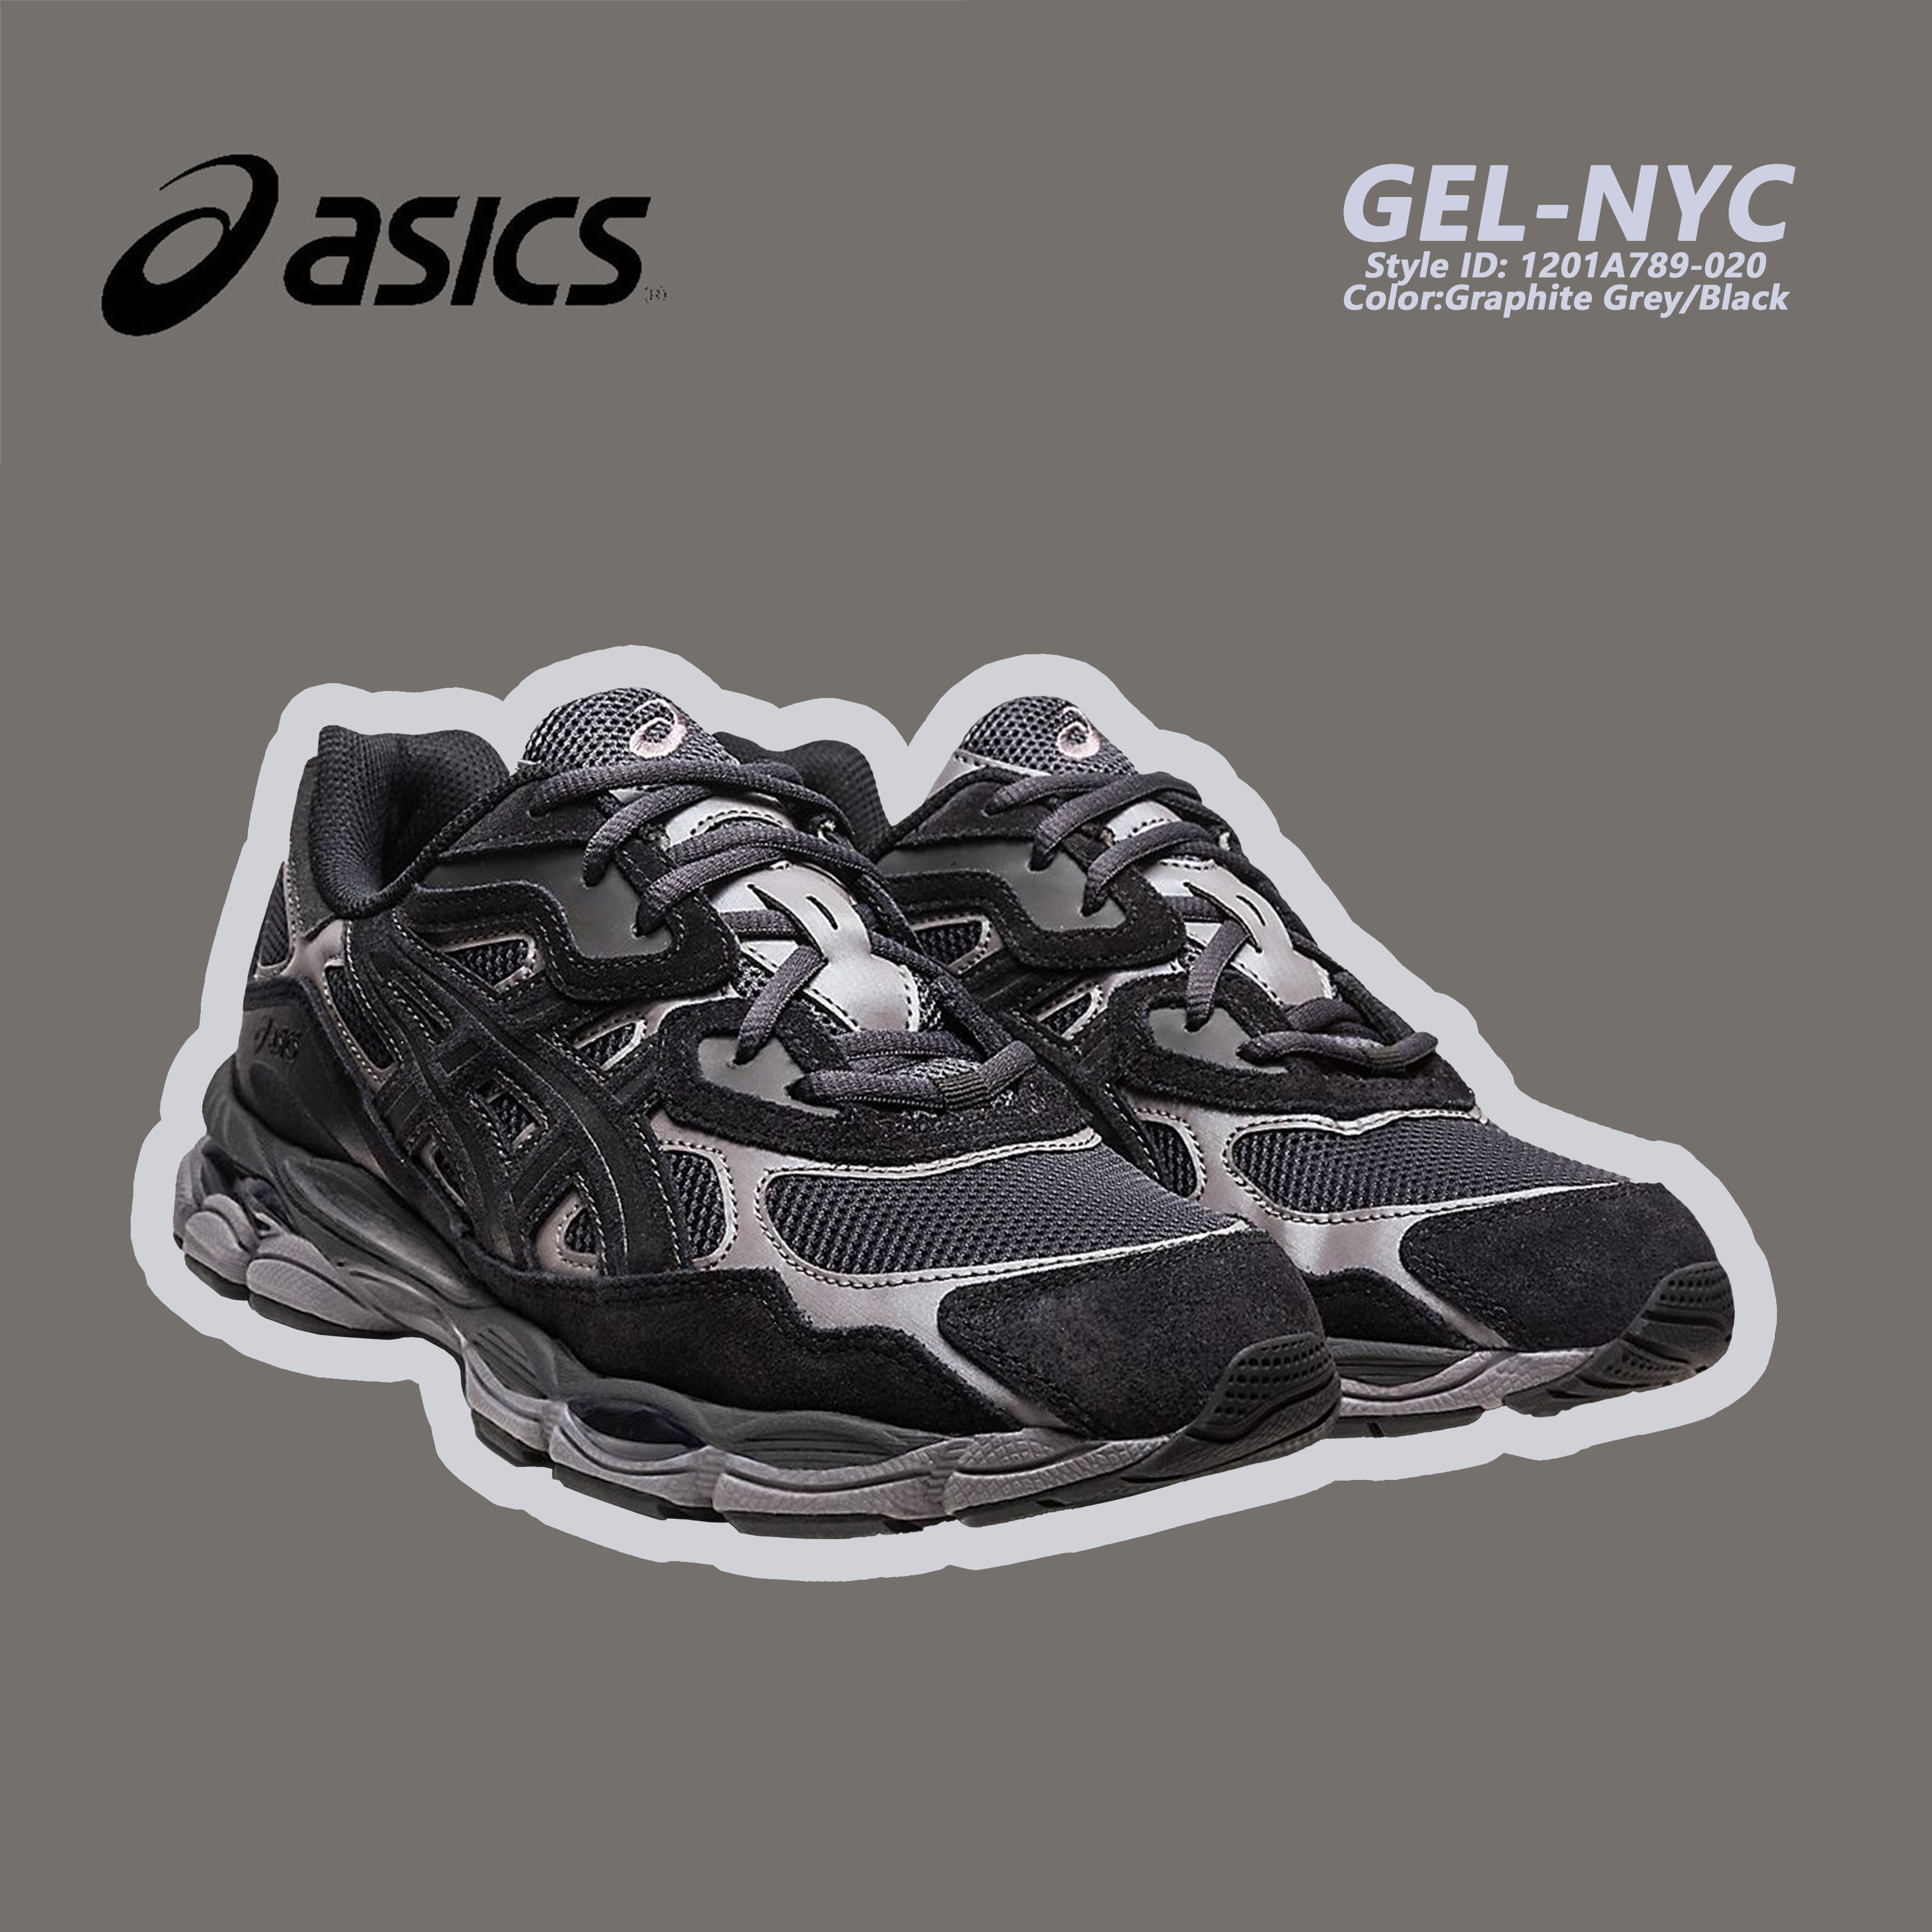 ASICS GEL-NYC / Graphite Grey Black